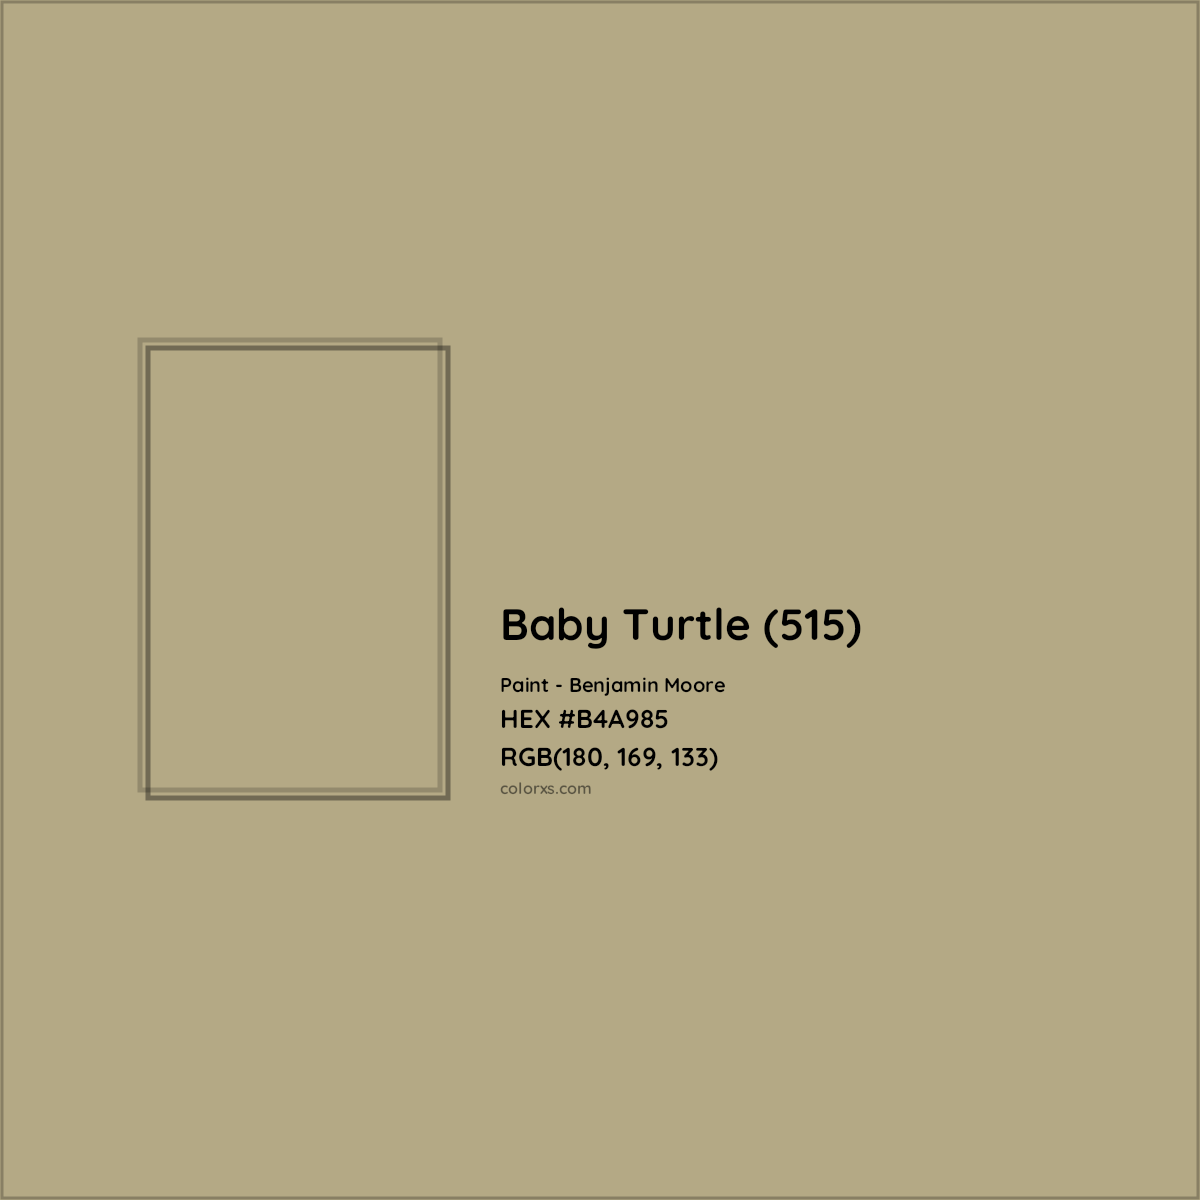 HEX #B4A985 Baby Turtle (515) Paint Benjamin Moore - Color Code